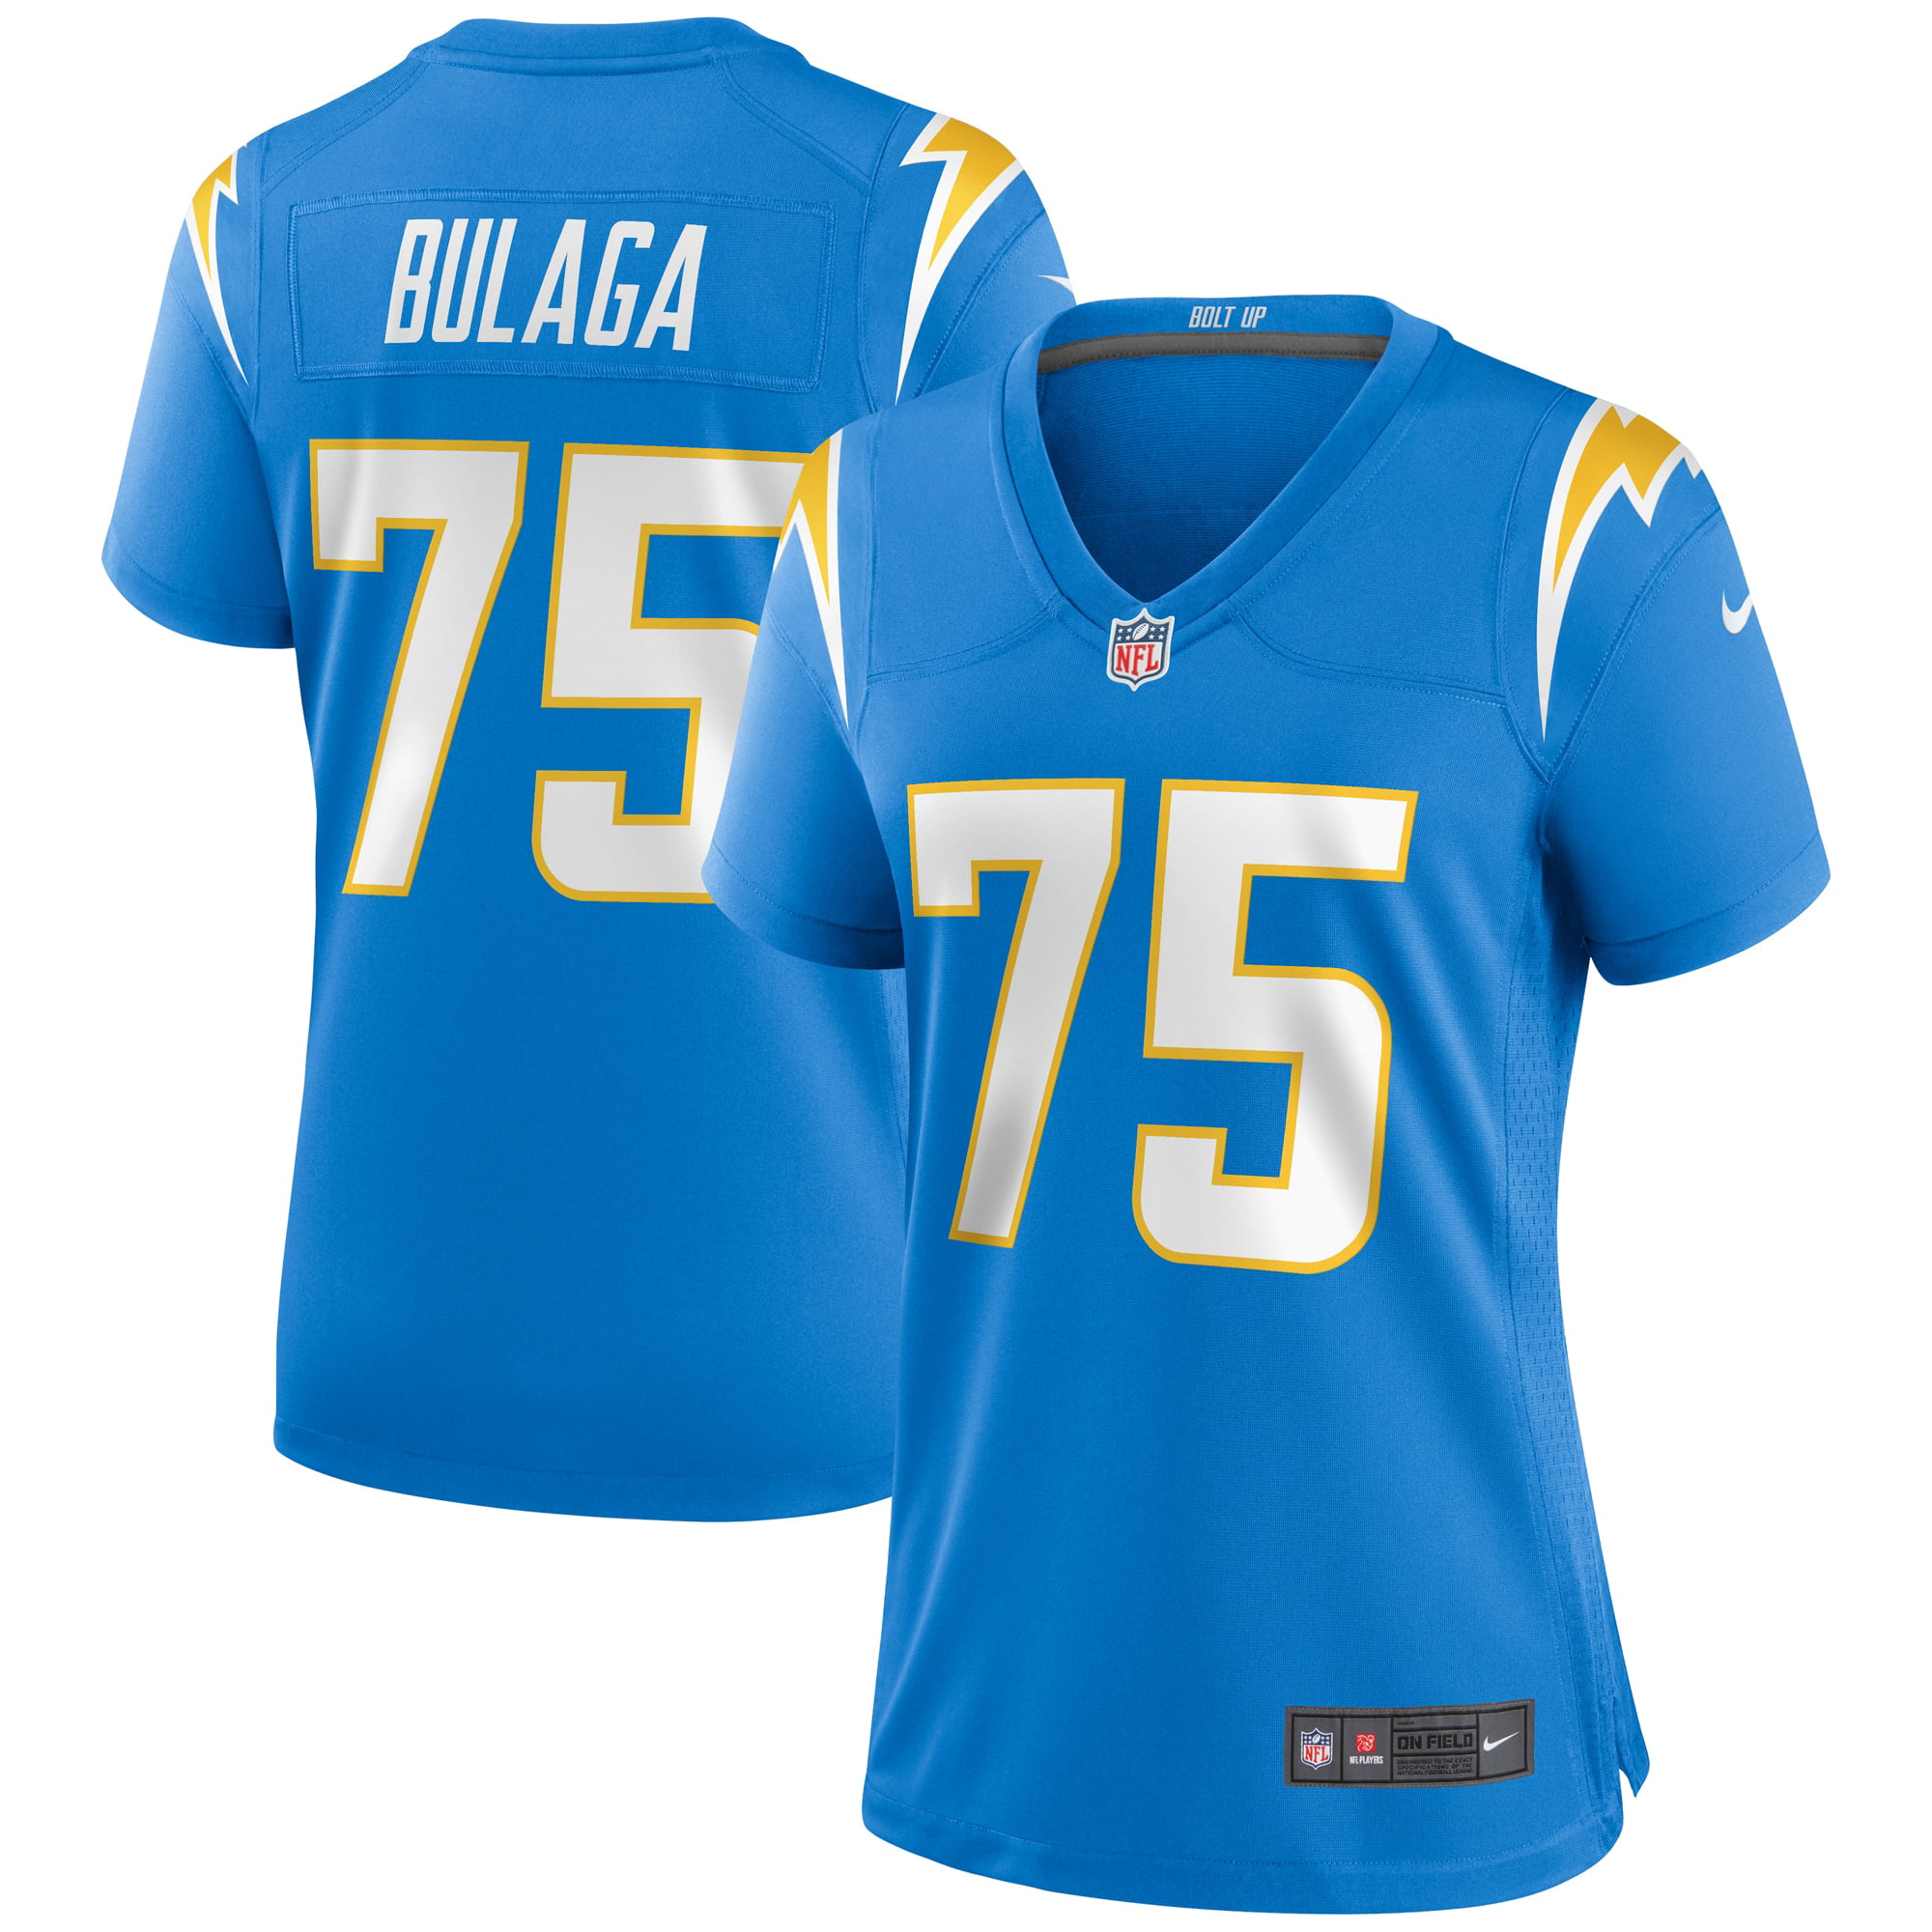 Bryan Bulaga Los Angeles Chargers Nike Women's Game Jersey - Powder Blue - Walmart.com